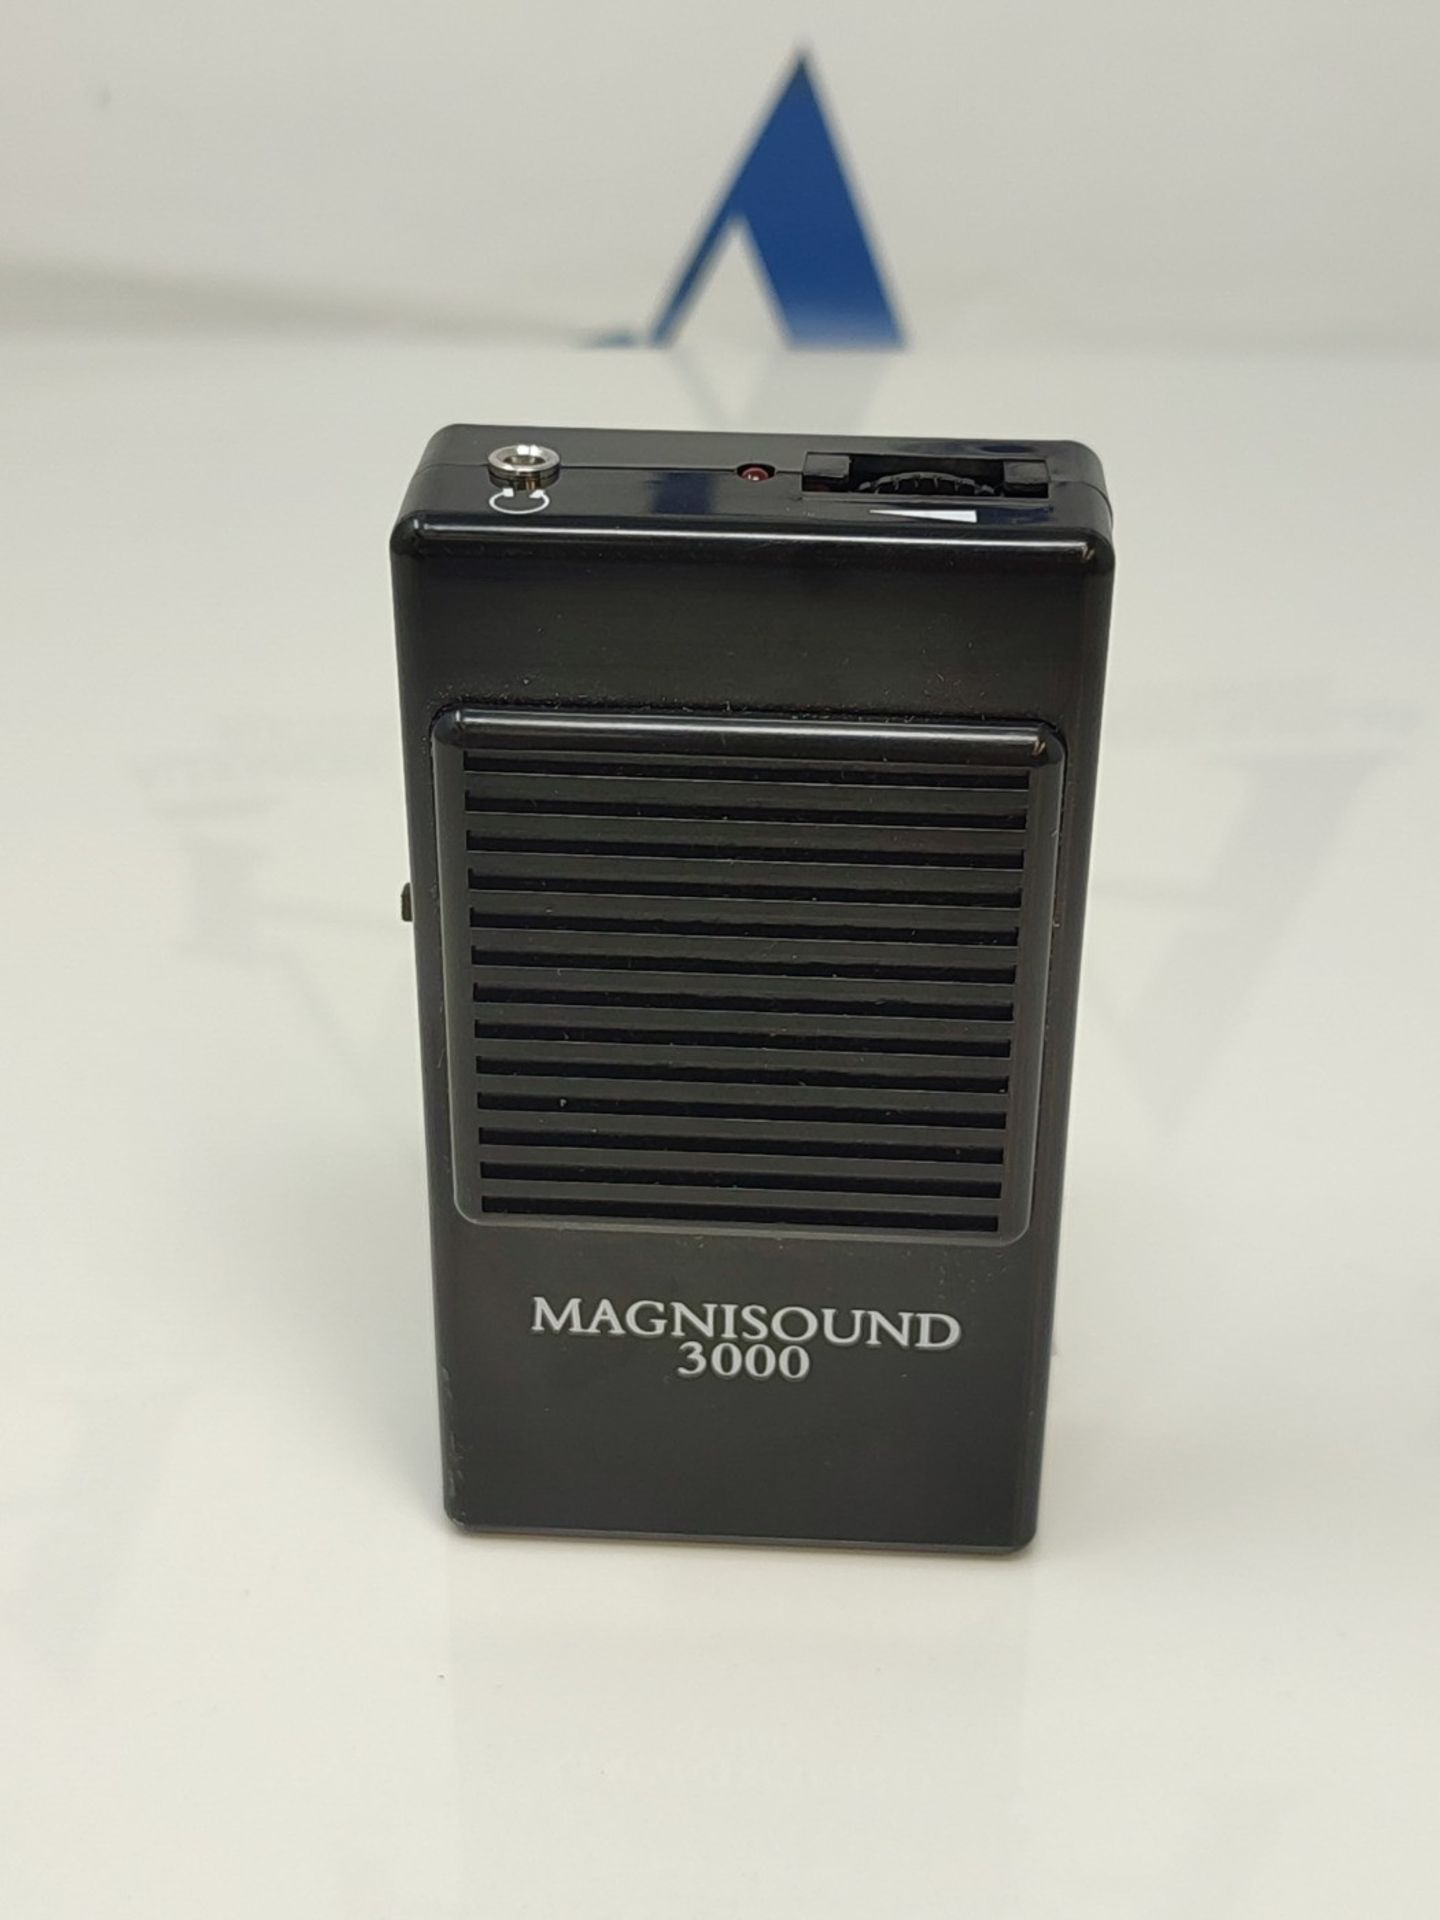 Magnisound 3000 TV Amplifier Hearing Aid Listen Assistance Megaphone Device - Image 2 of 3